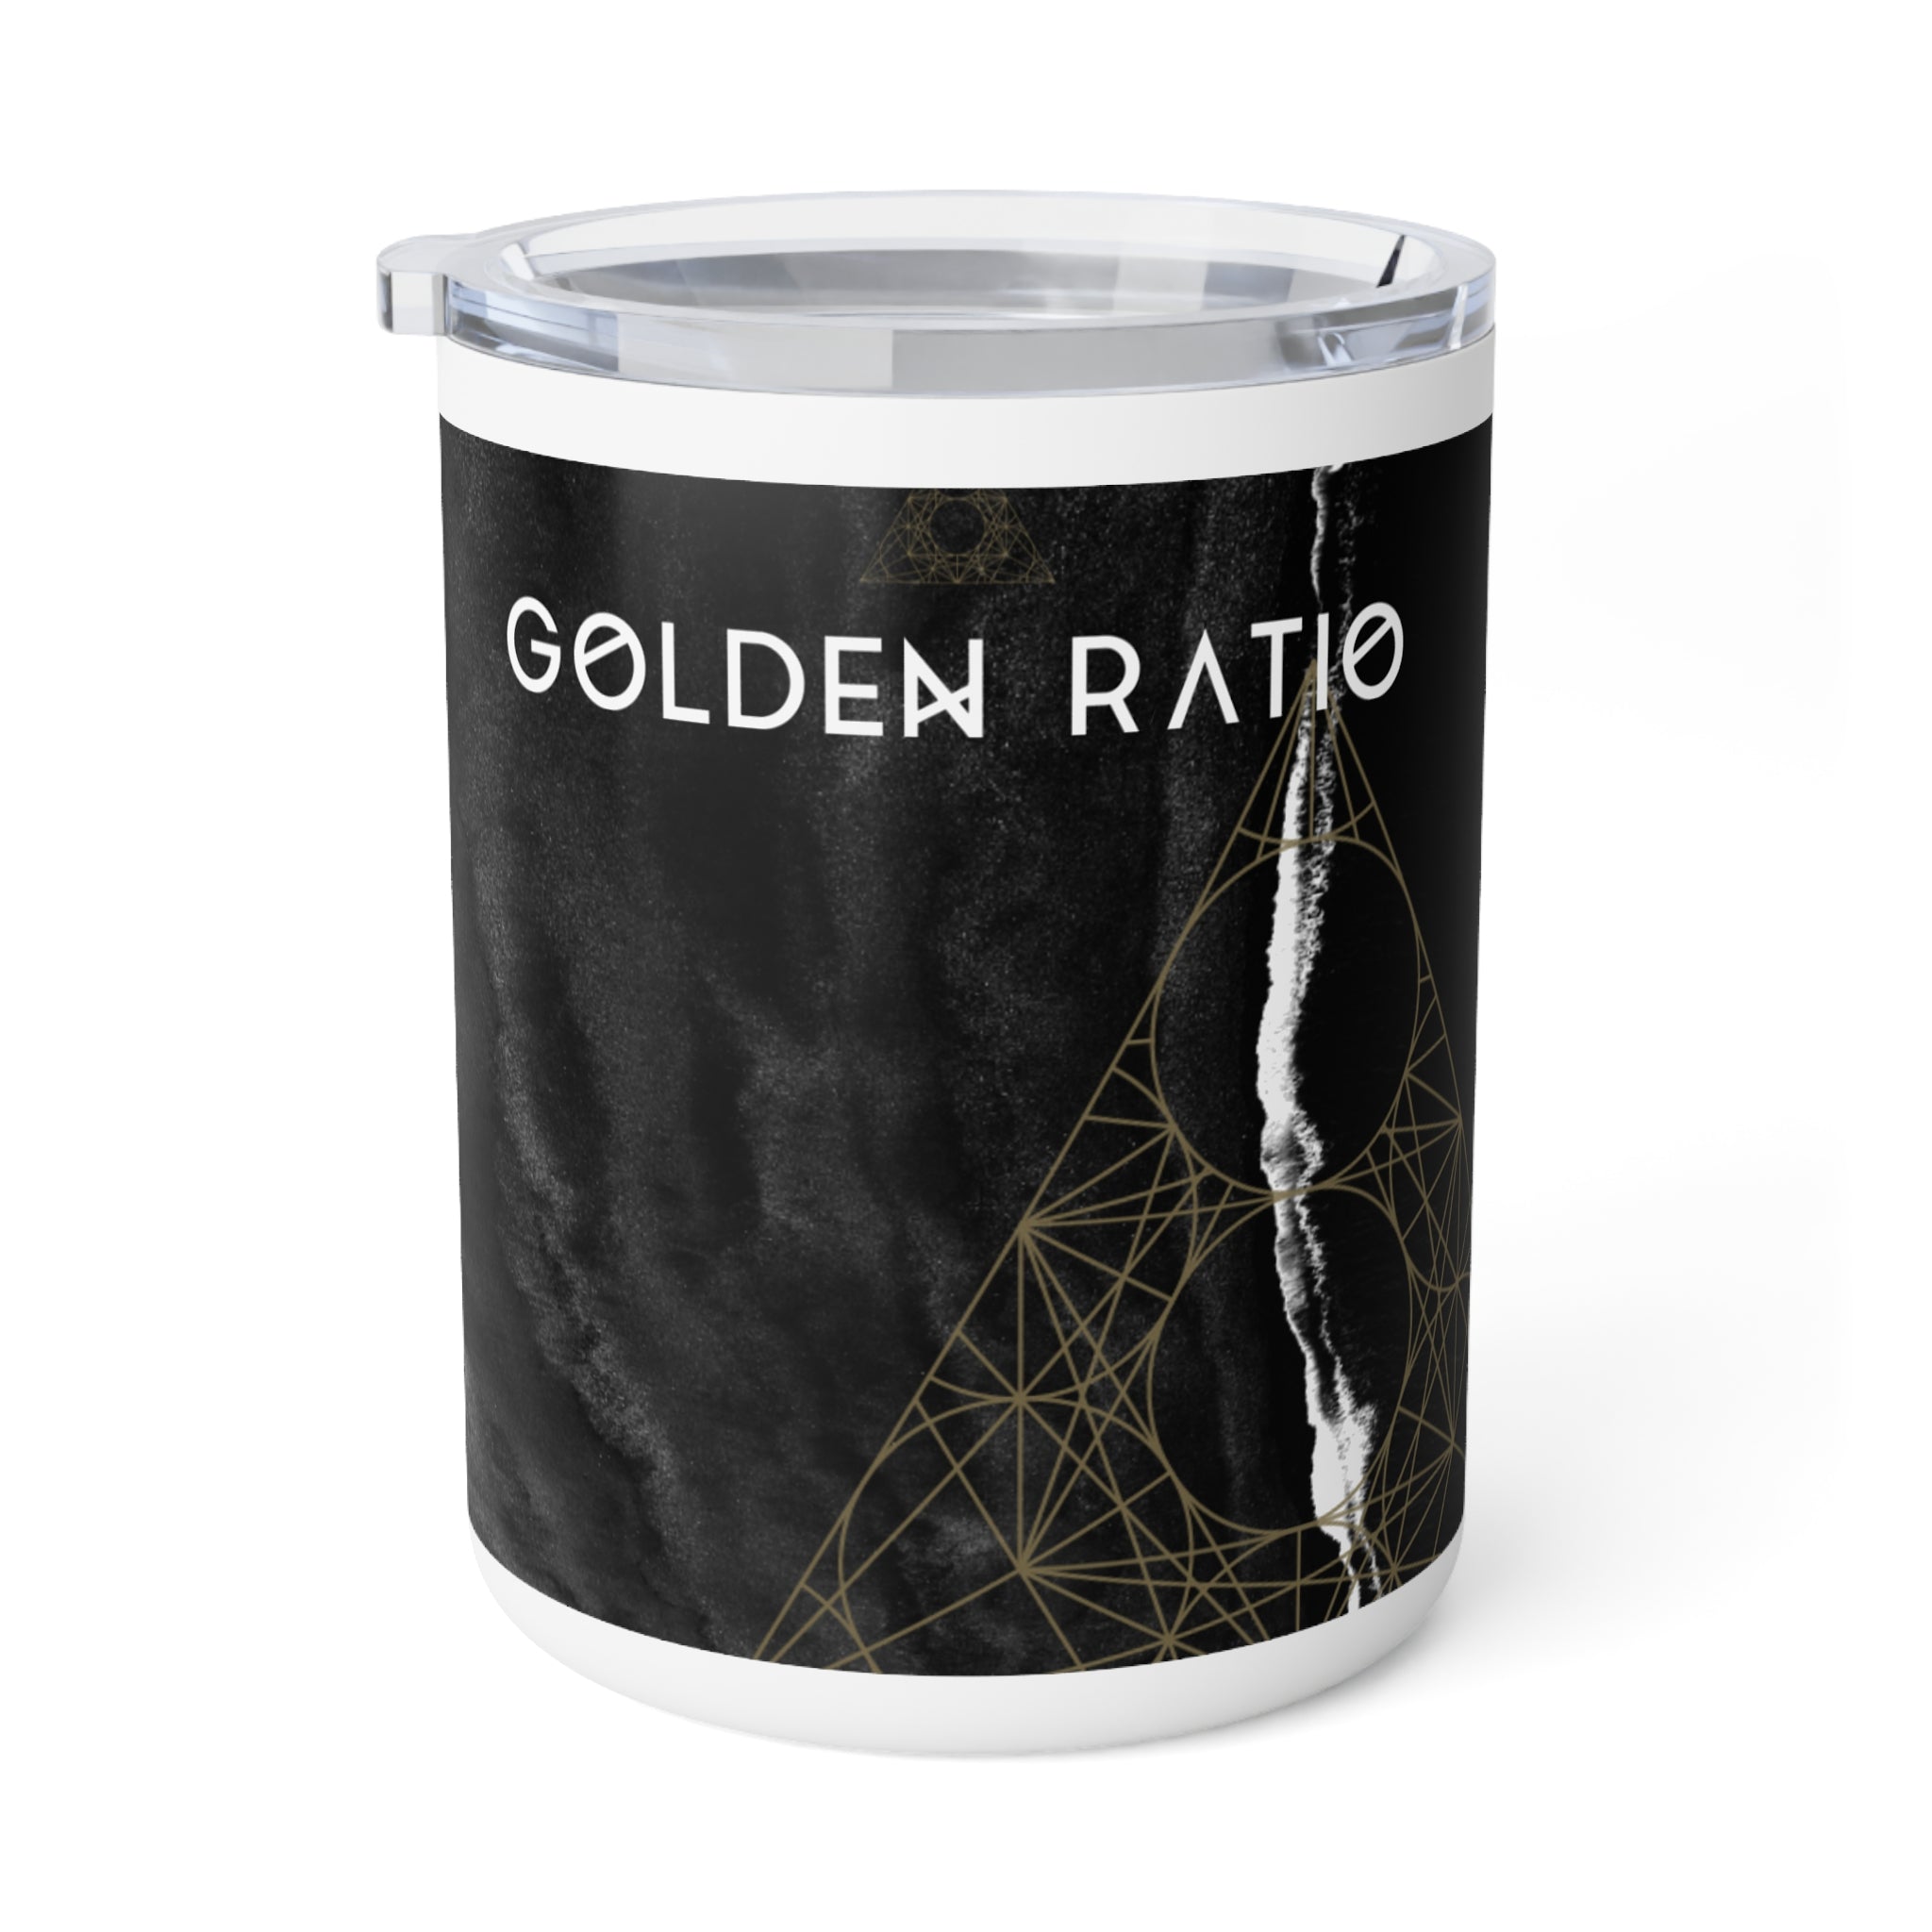 Slate + Gold Insulated Coffee Mug, 10oz